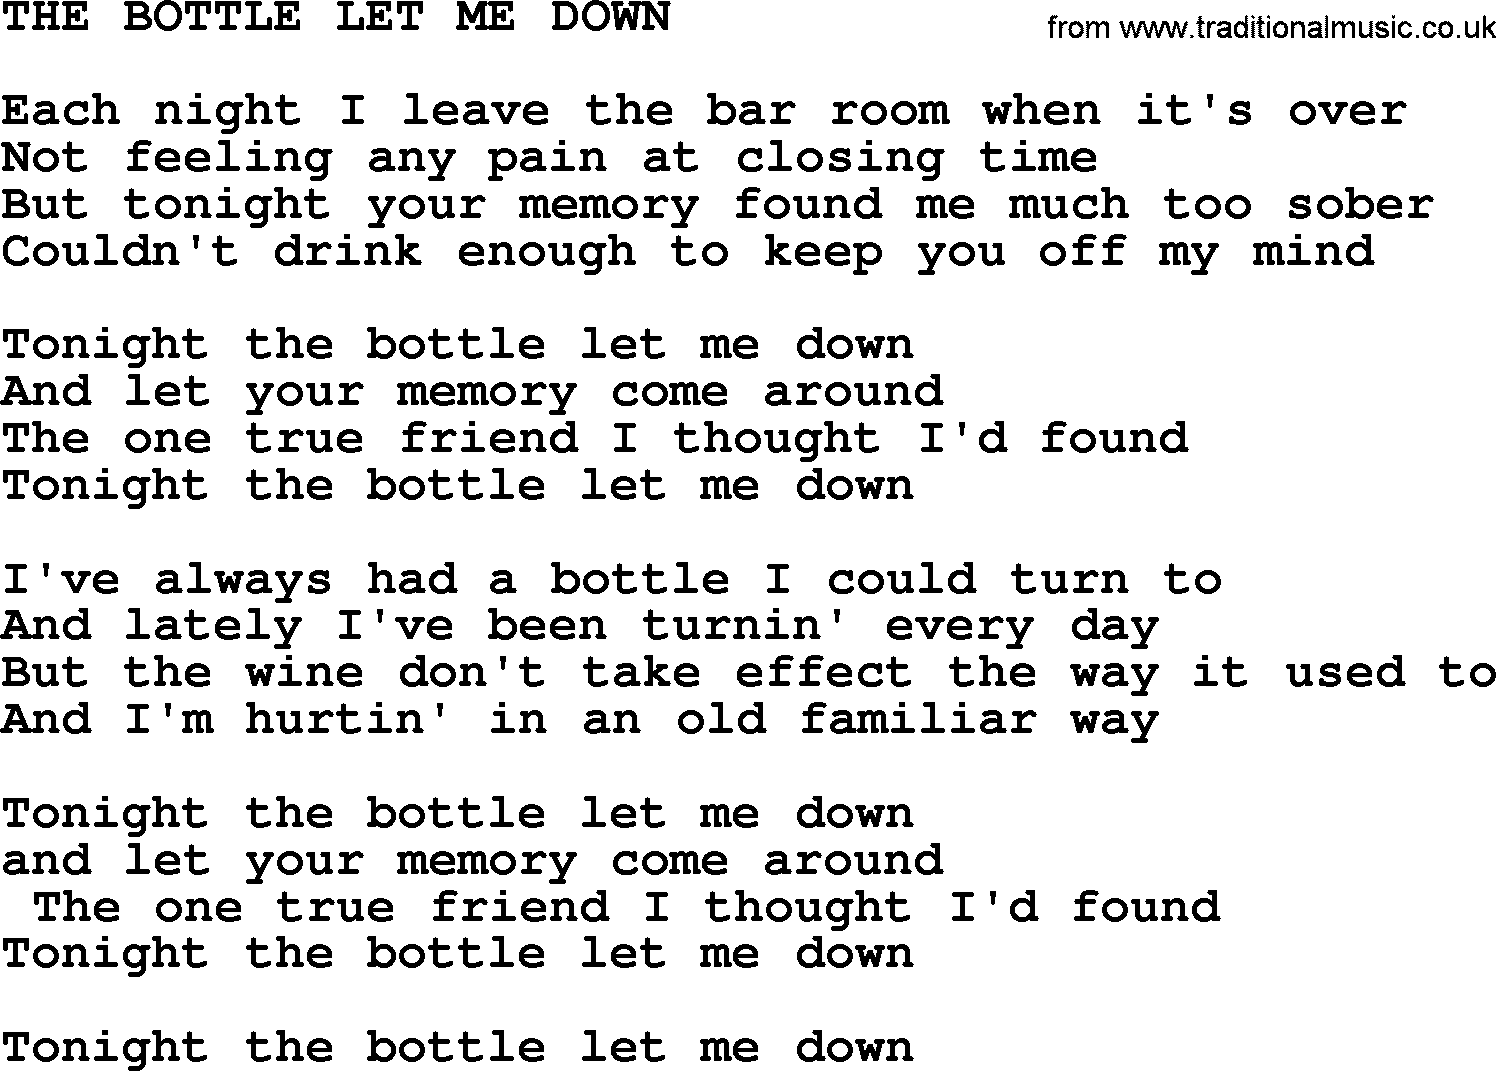 Merle Haggard song: The Bottle Let Me Down, lyrics.